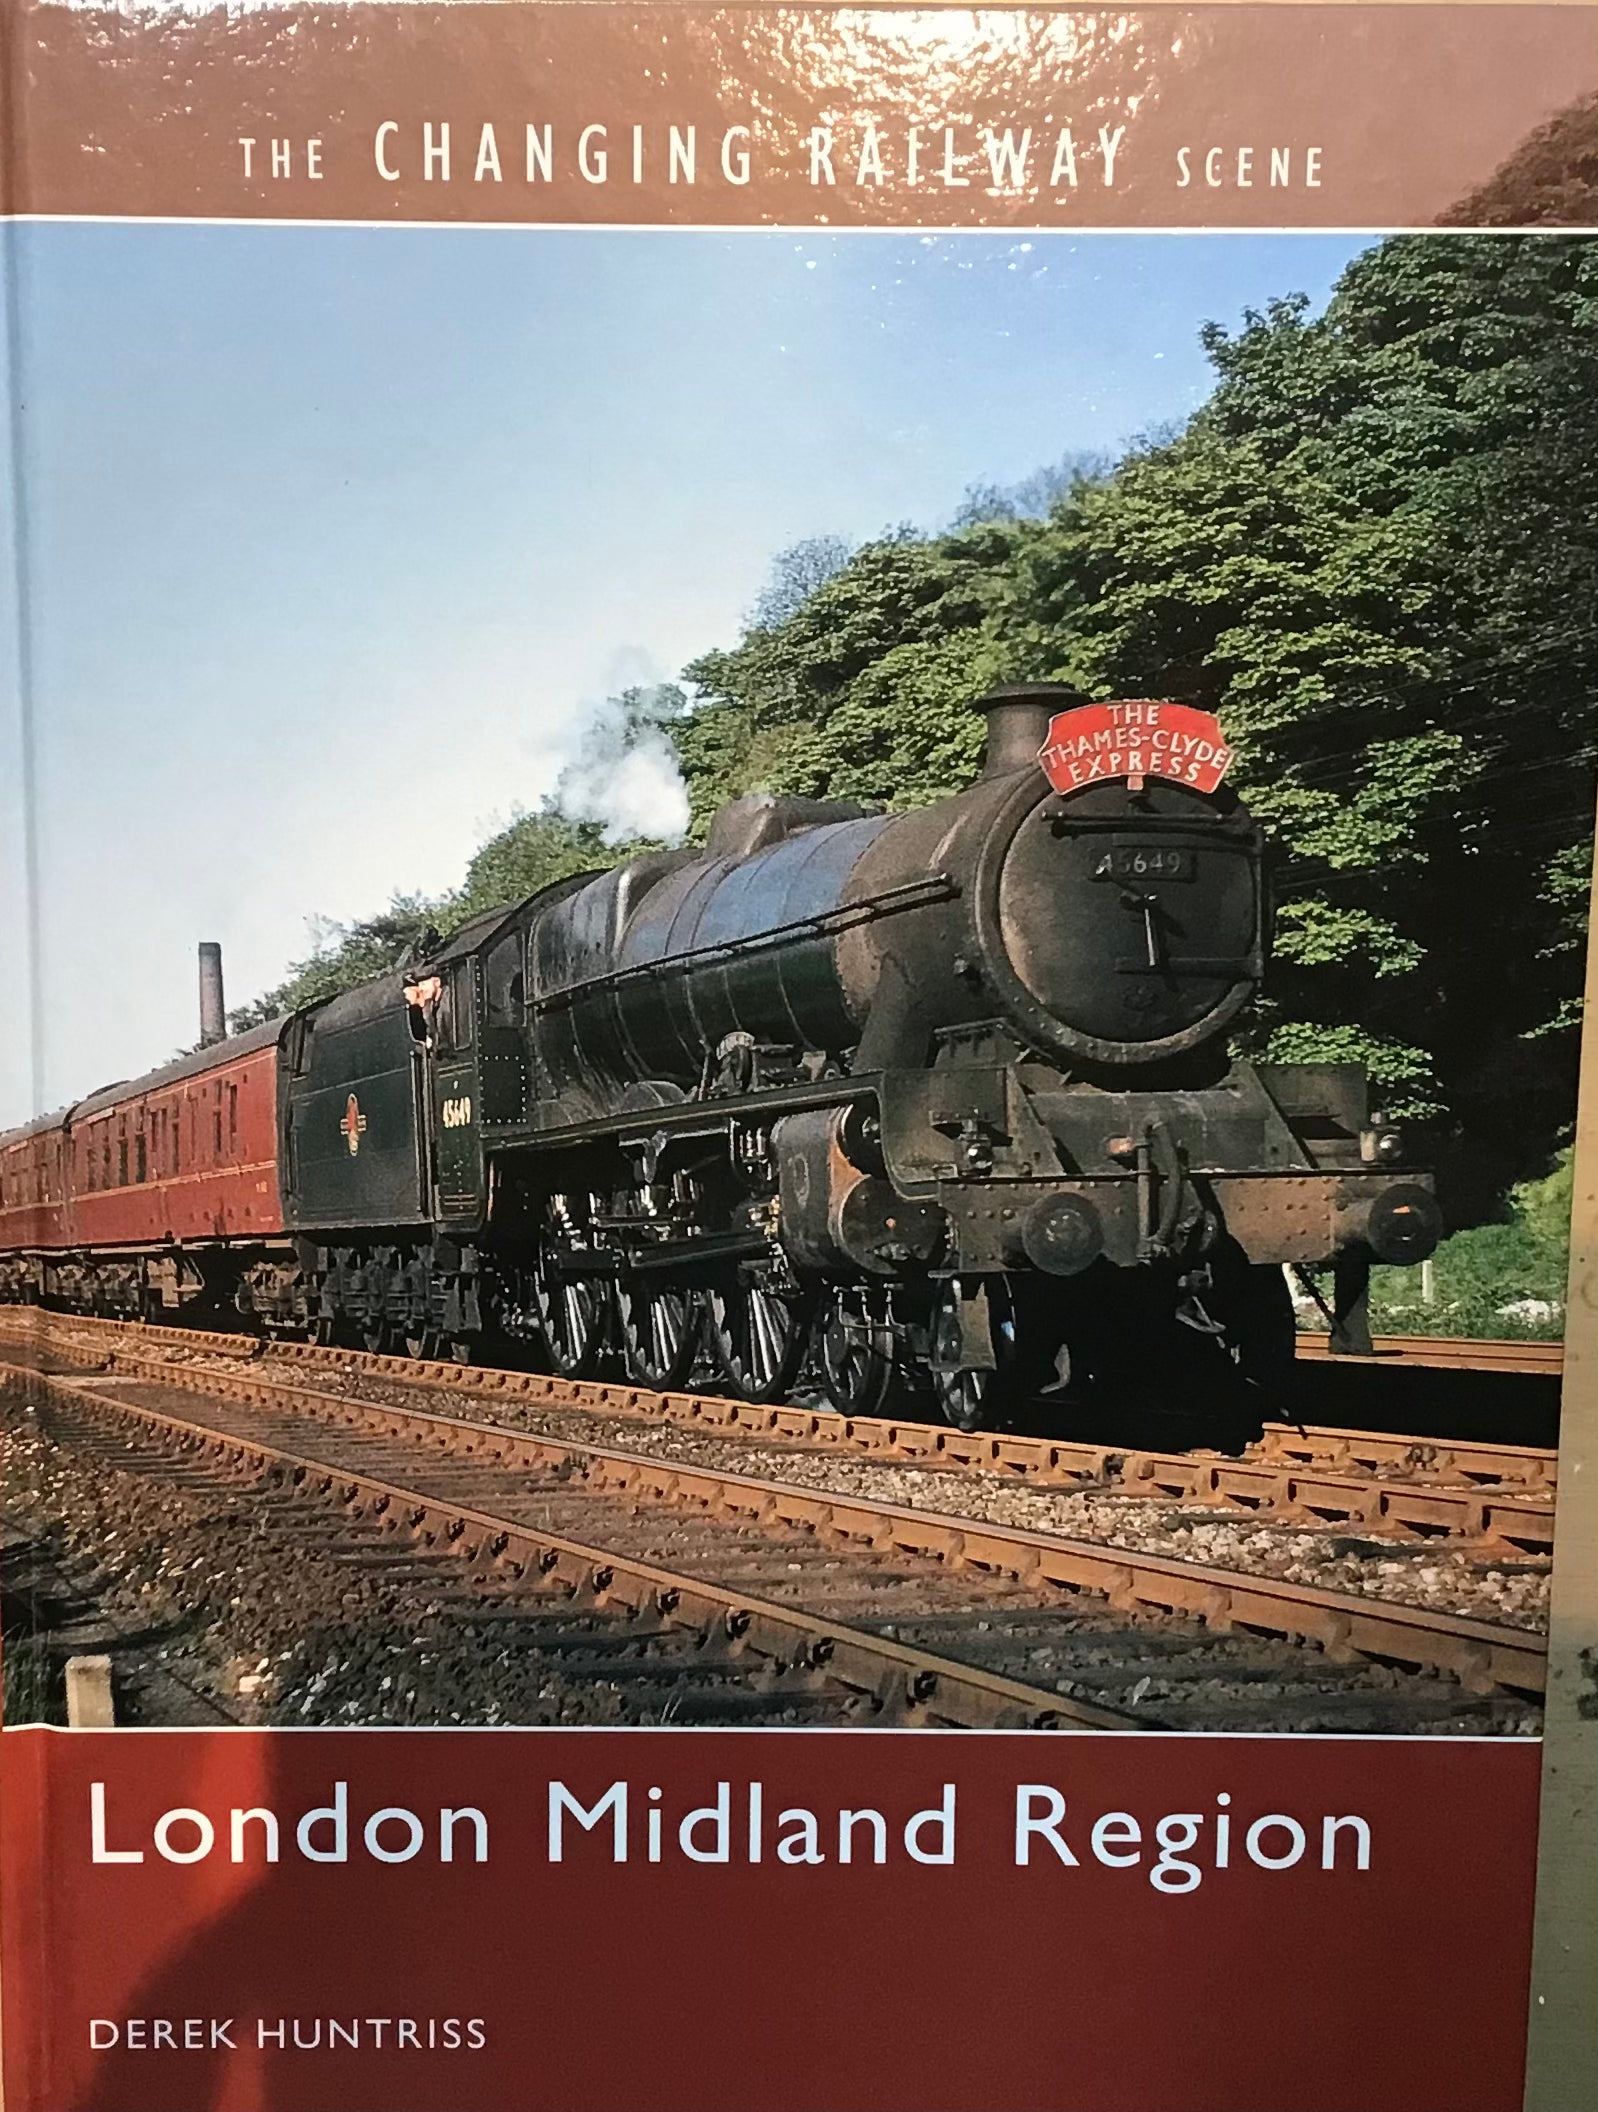 The Changing Railway Scene: London Midland Region by Derek Huntriss - Chester Model Centre